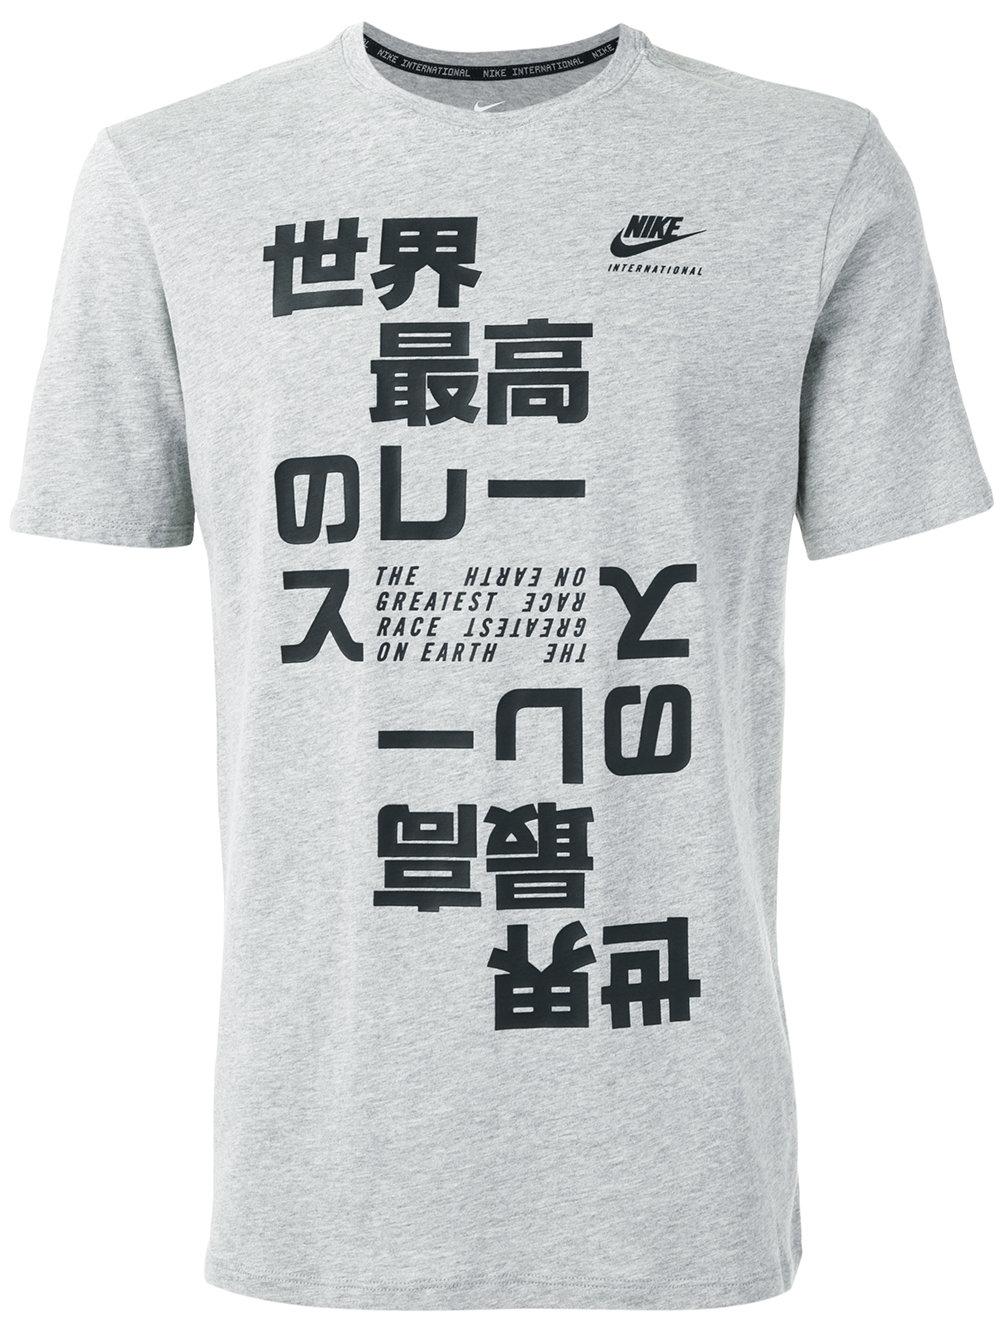 nike tshirt logo japanese - www.aragondeco.ru.